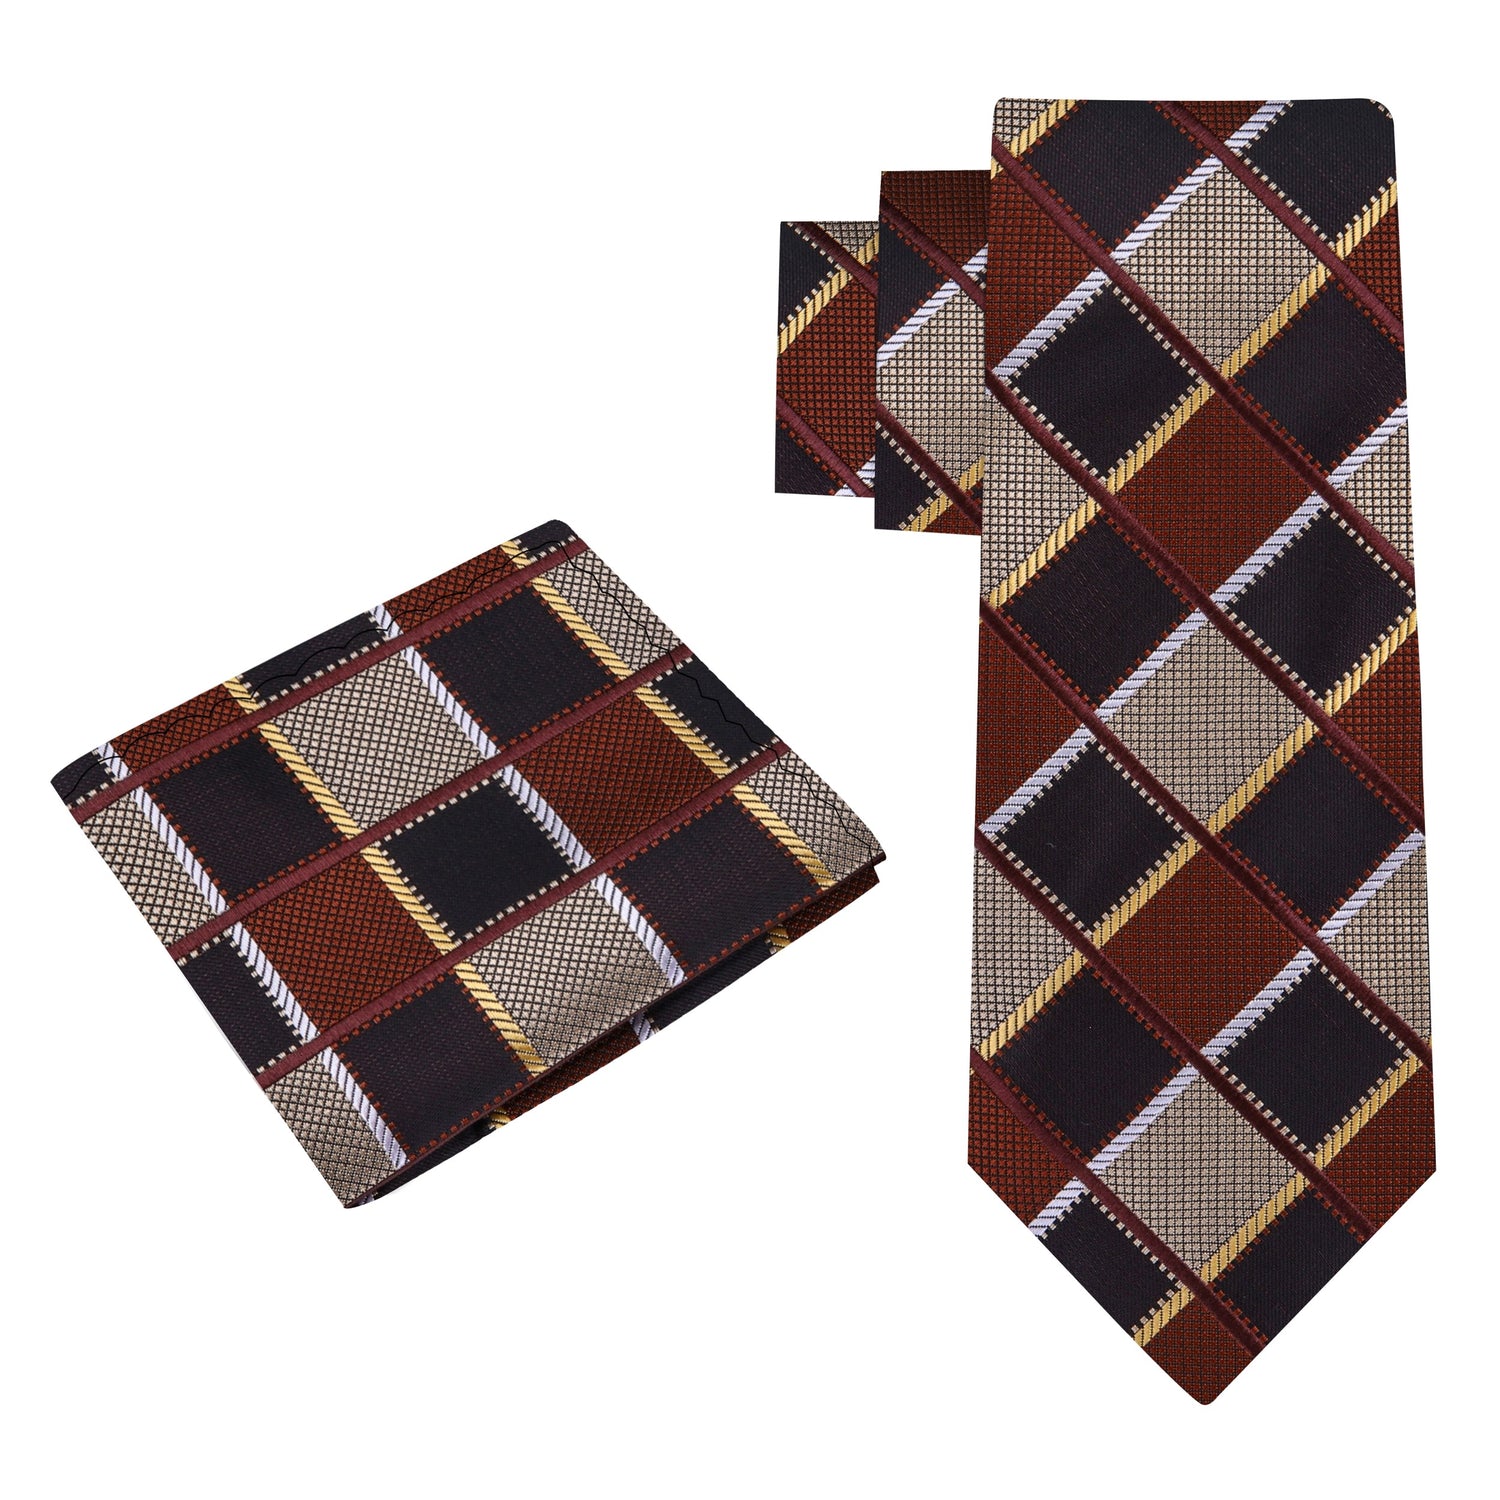 Alt View: A Brown, Light Brown Geometric Diamond Pattern Silk Necktie, Matching Pocket Square